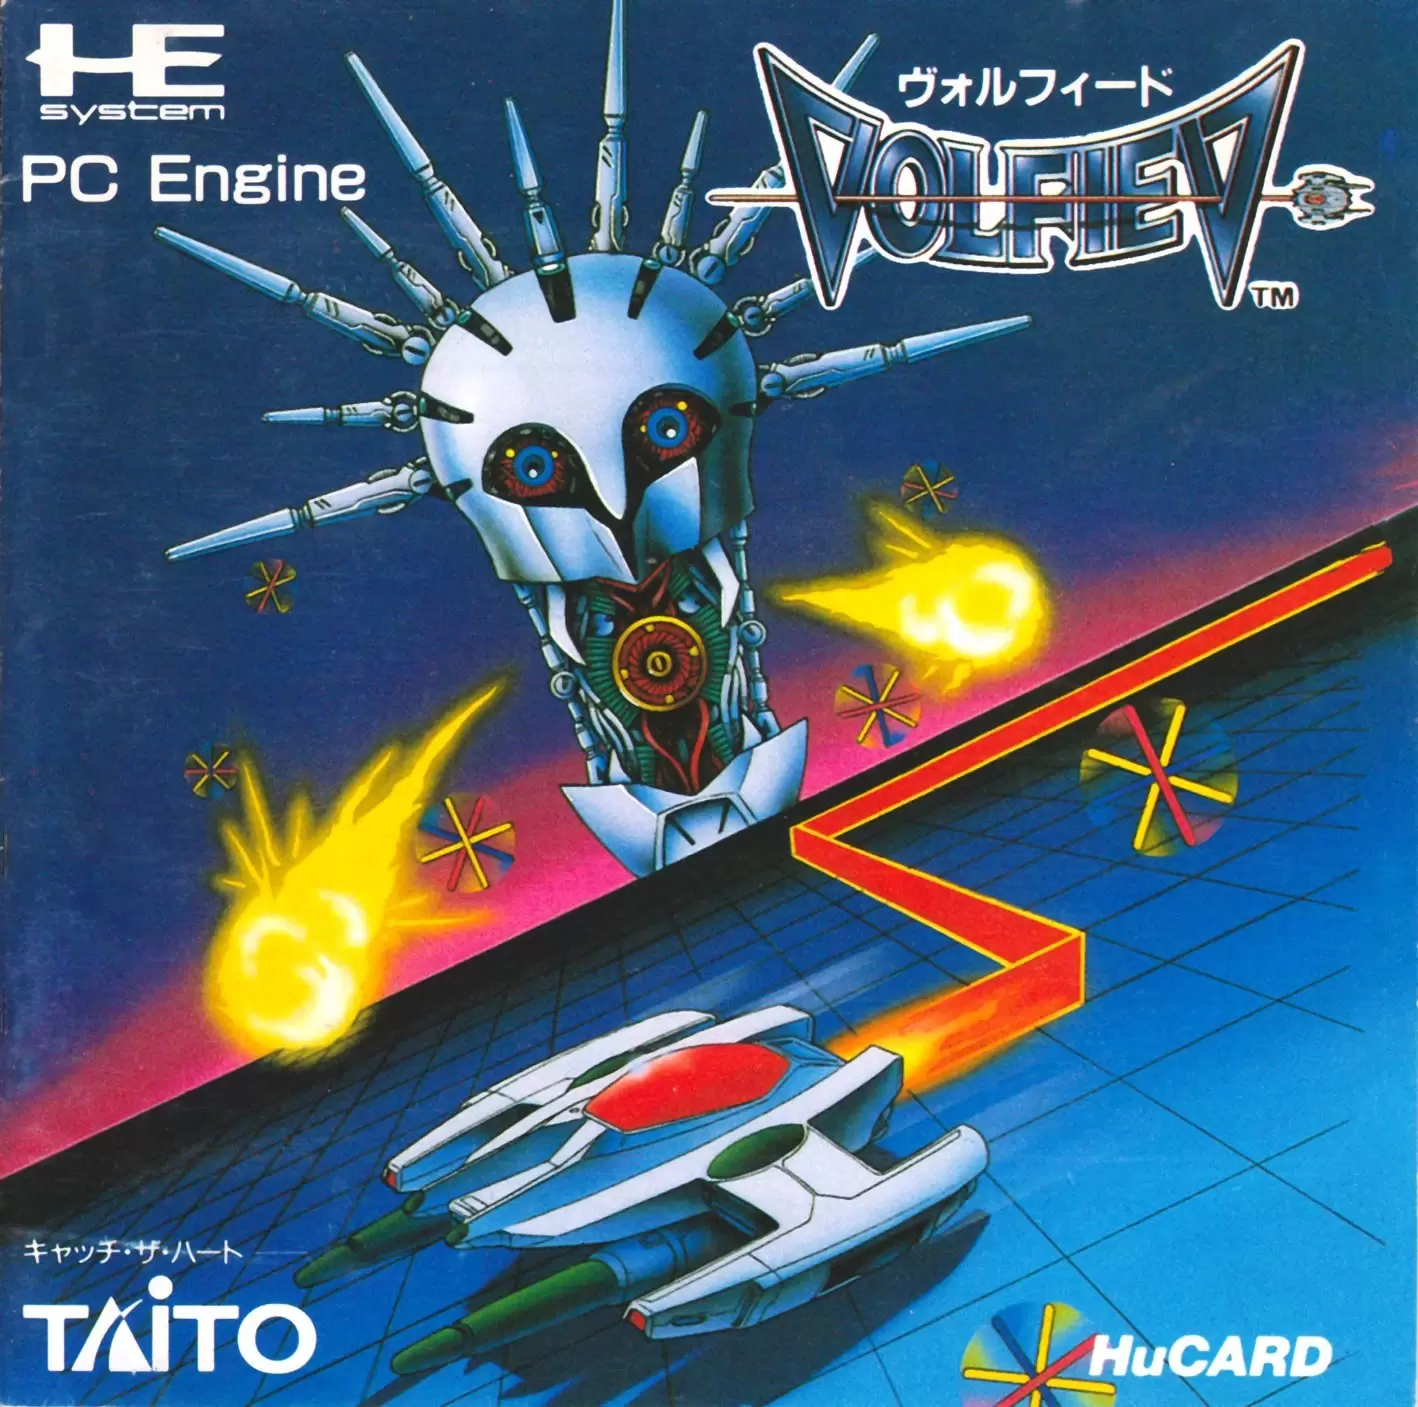 Turbo Grafx 16 - Volfied